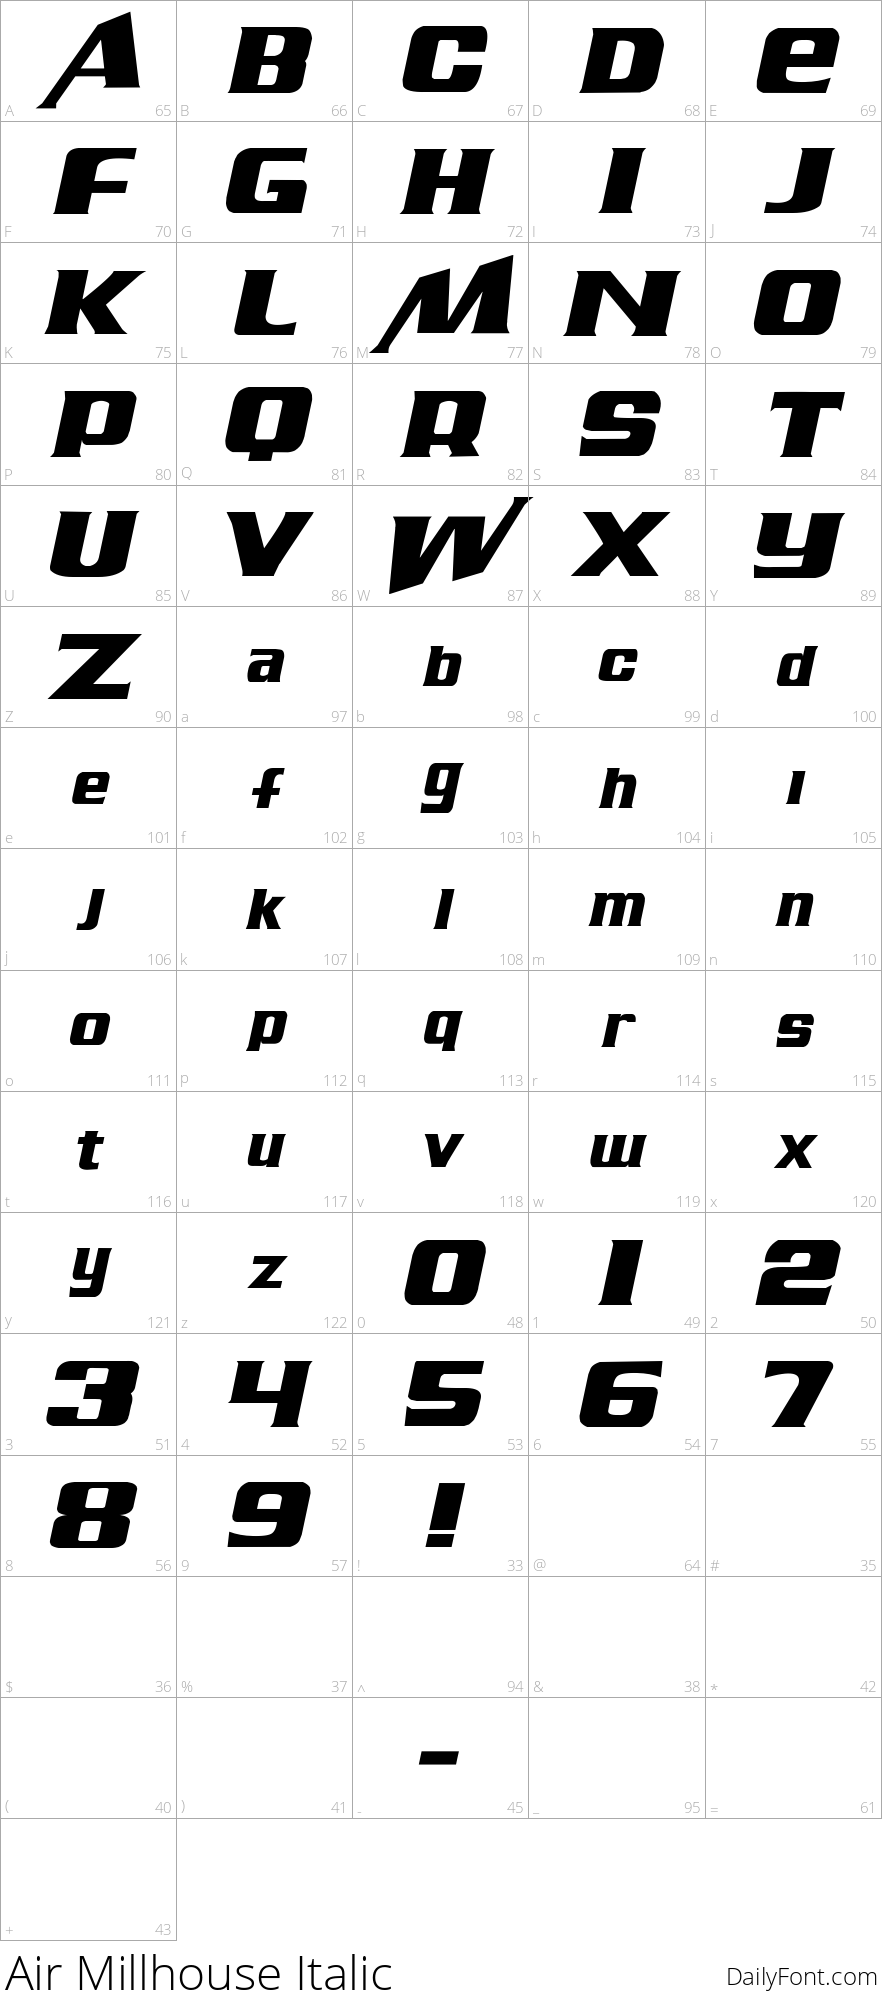 Air Millhouse Italic character map